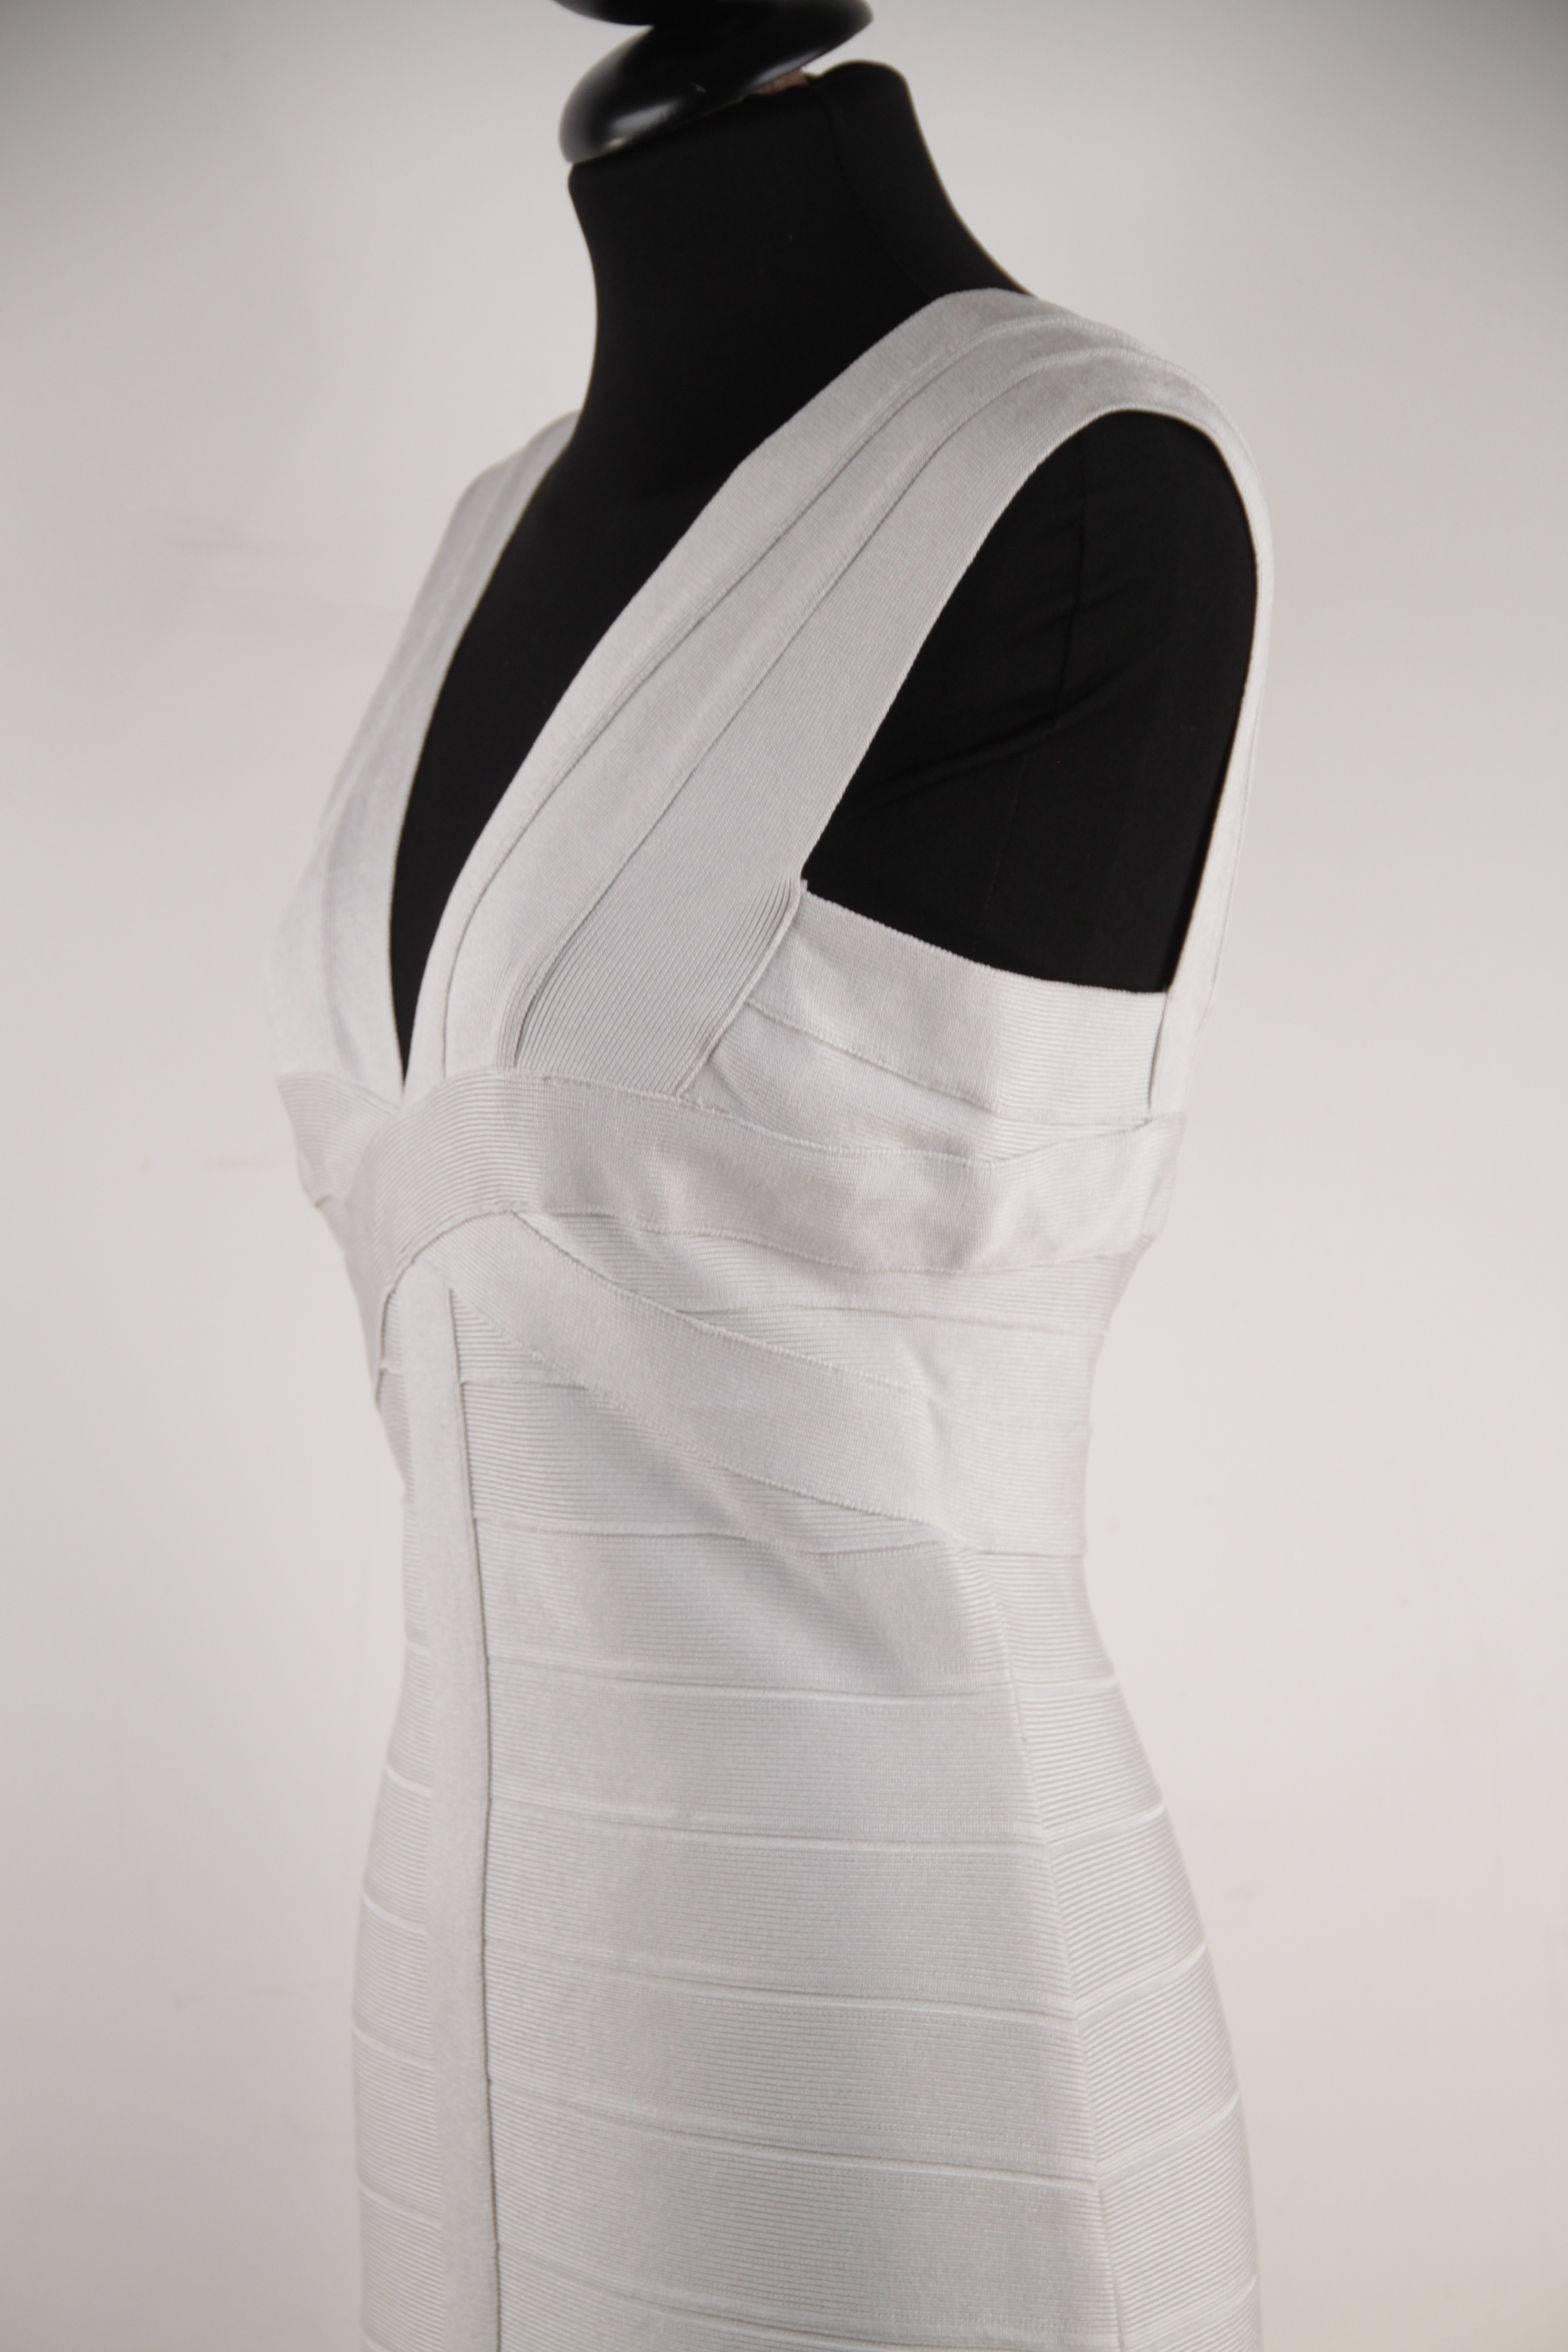 HERVE LEGER Pearl Gray Bodycon BANDAGE DRESS Sleeveless V NECK Size M CP 2